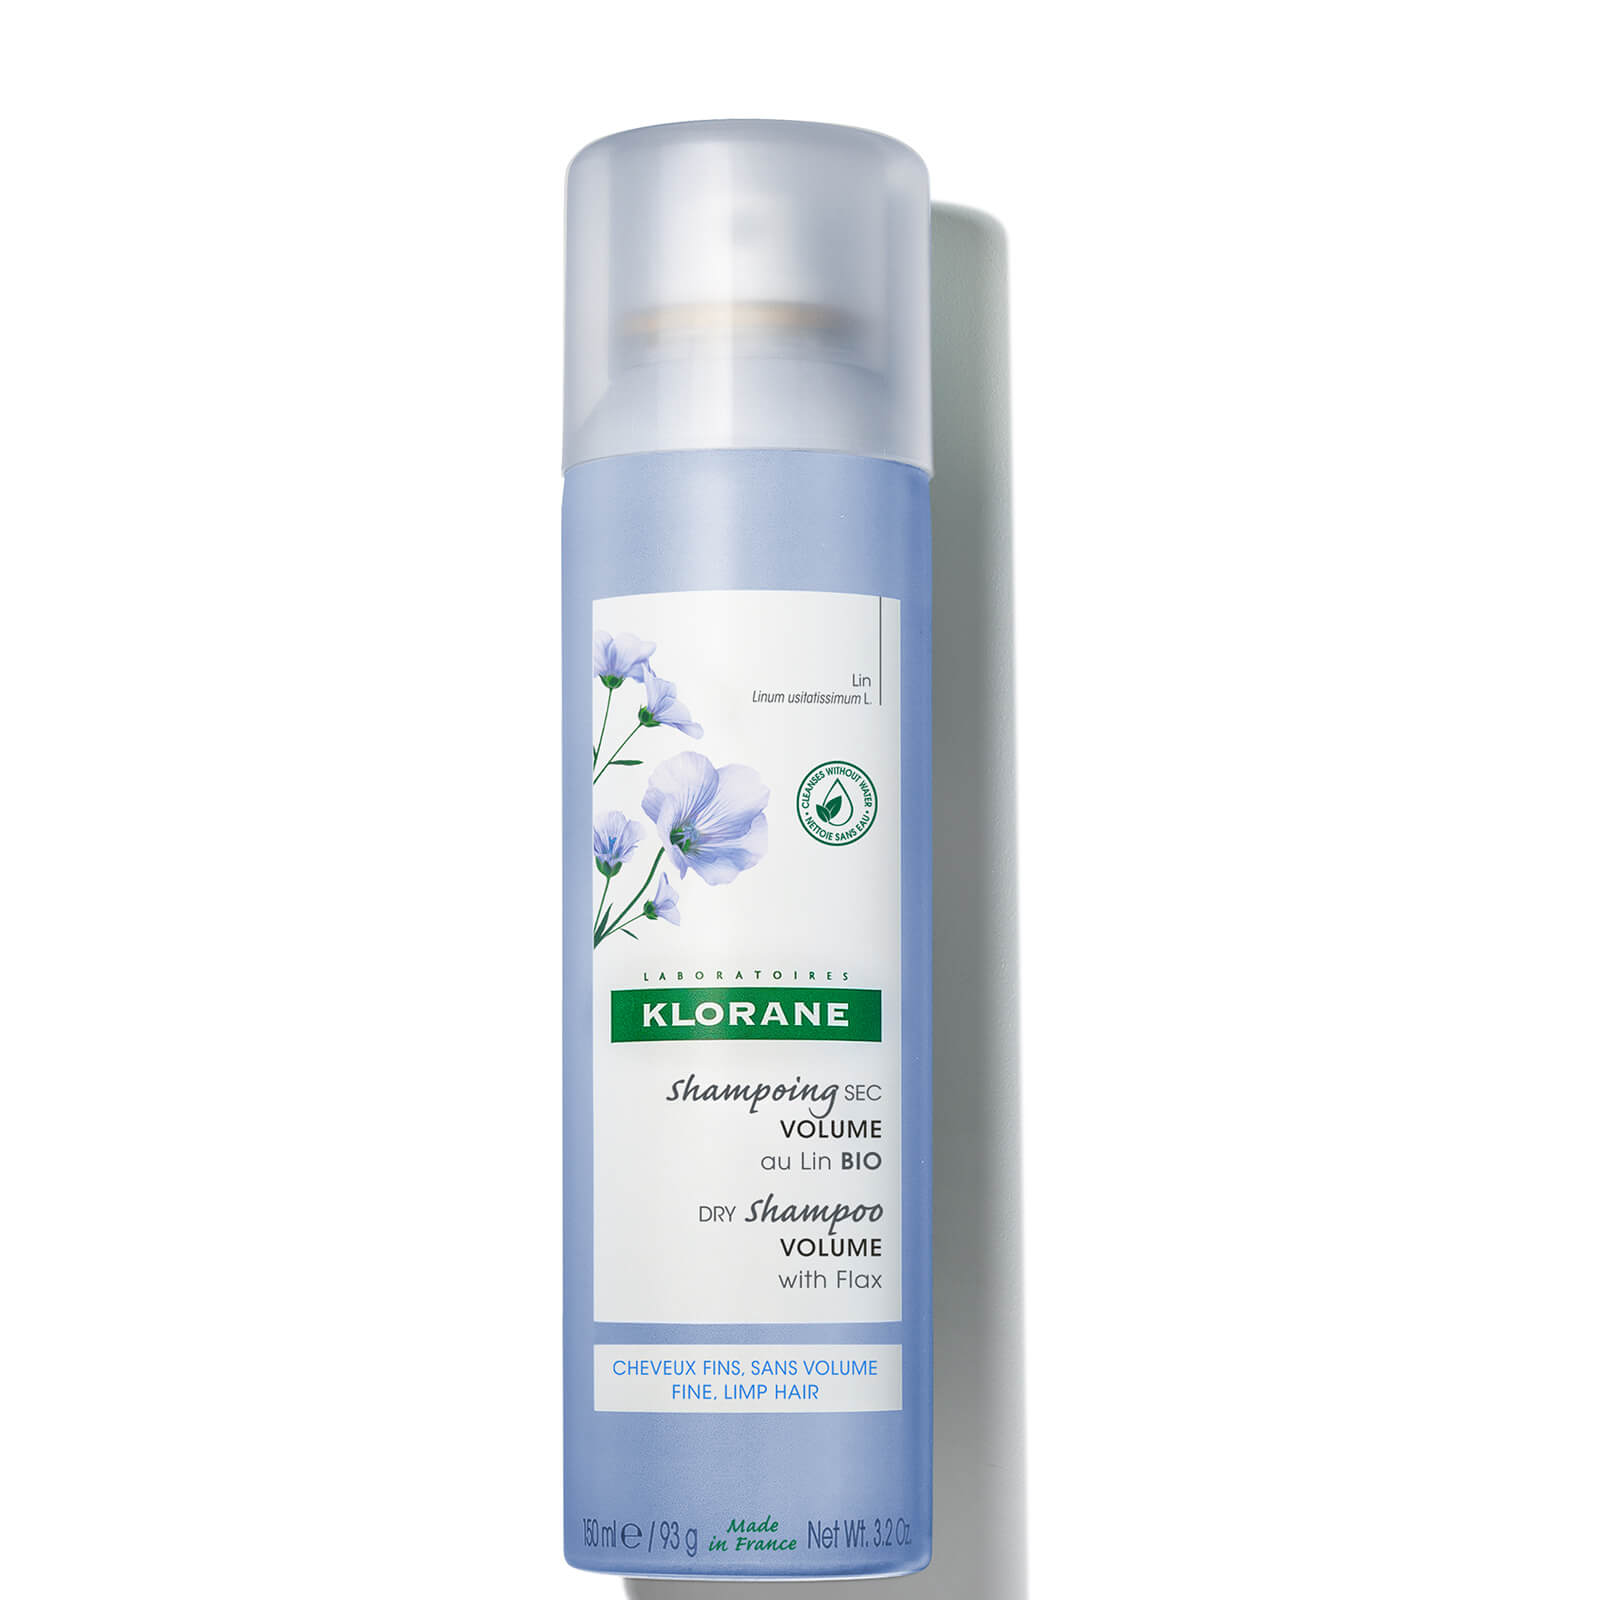 Klorane Volumising Dry Shampoo with Organic Flax Fibre for Fine, Limp Hair 150ml lookfantastic.com imagine